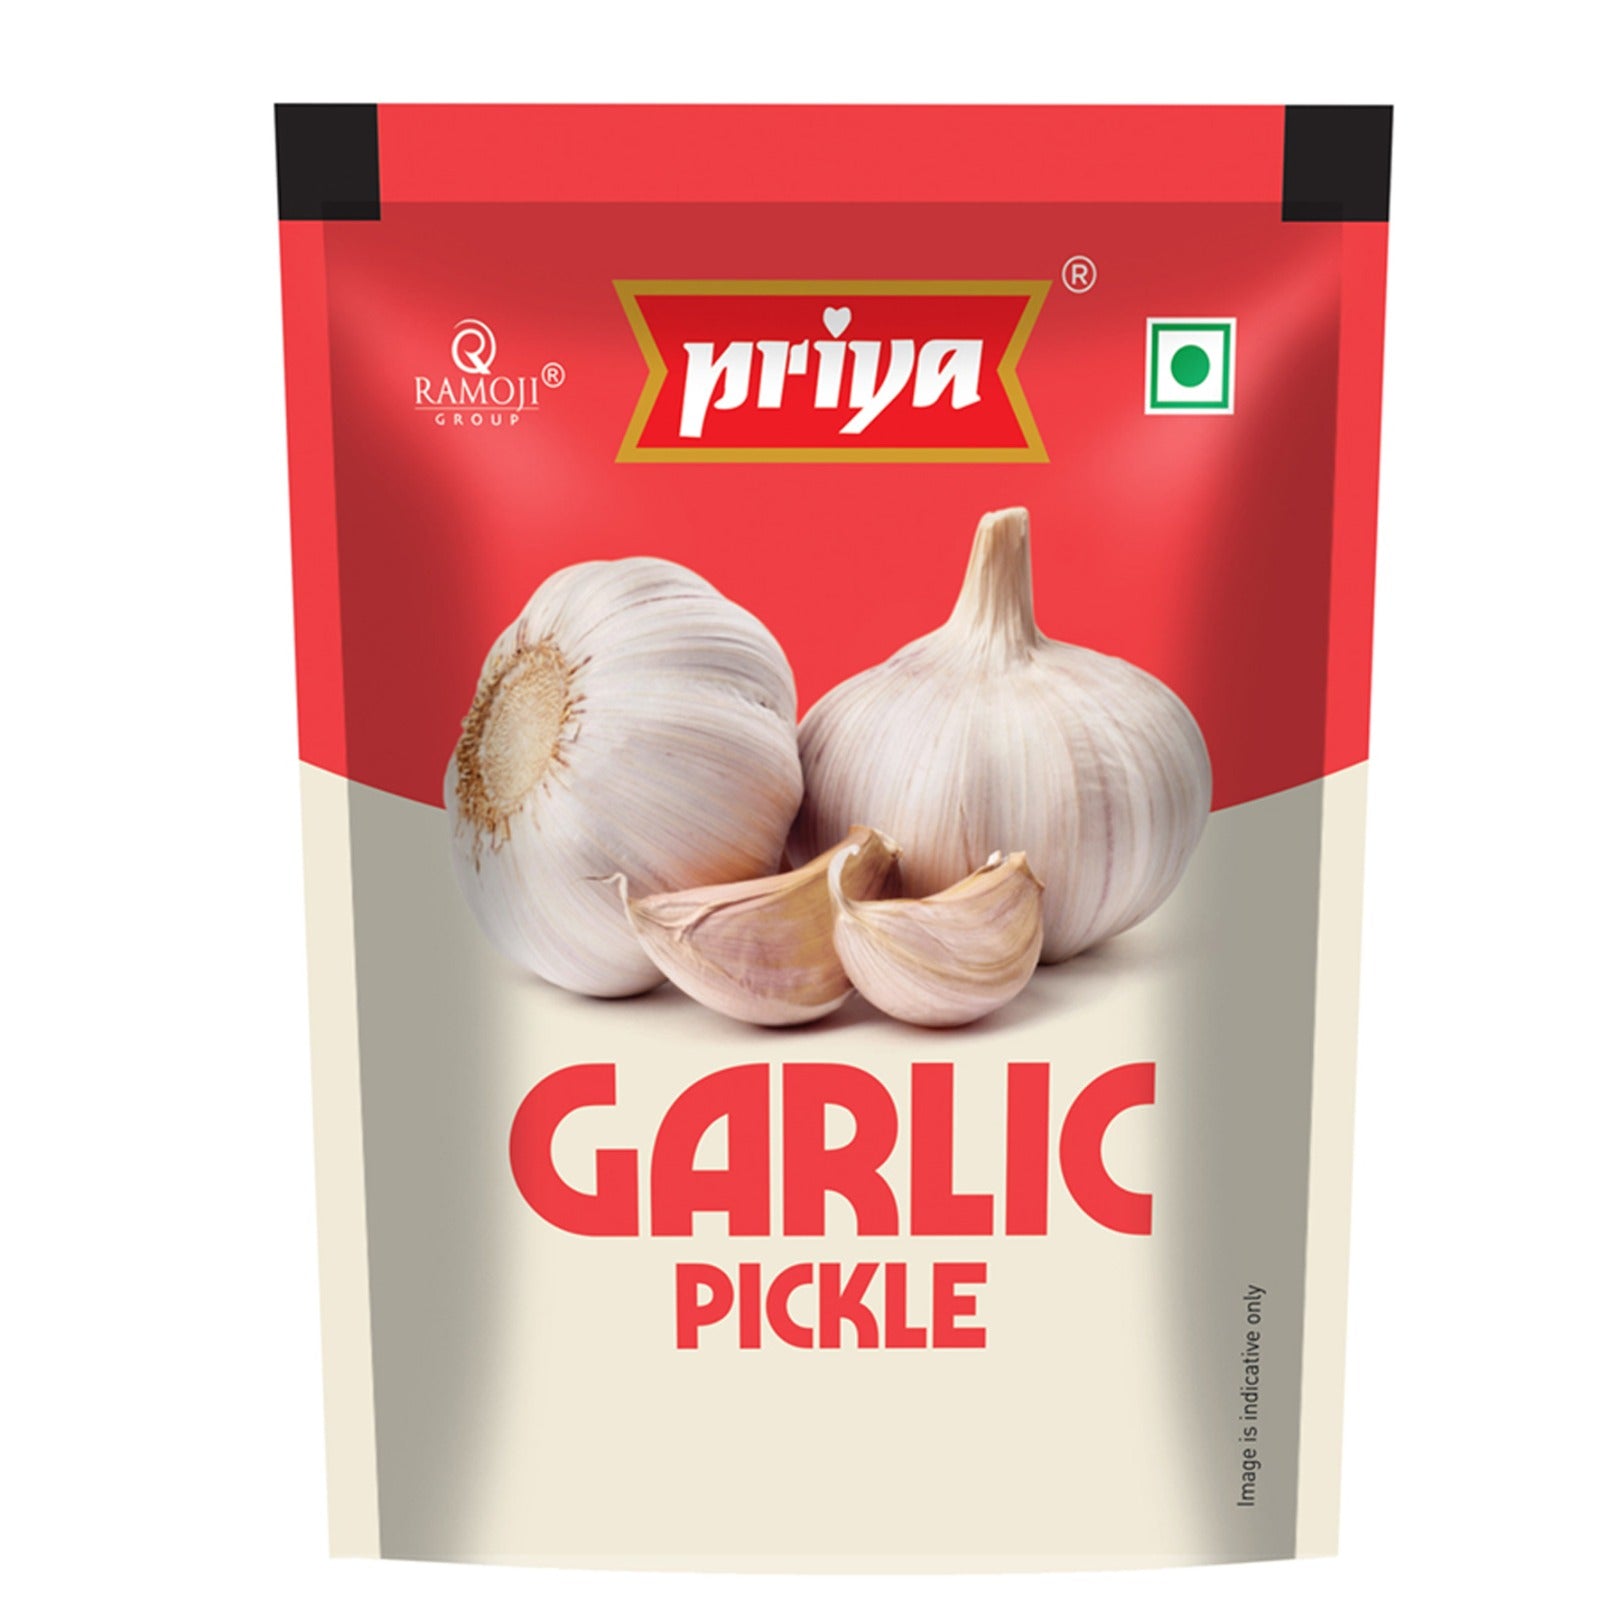 priya garlic pickle